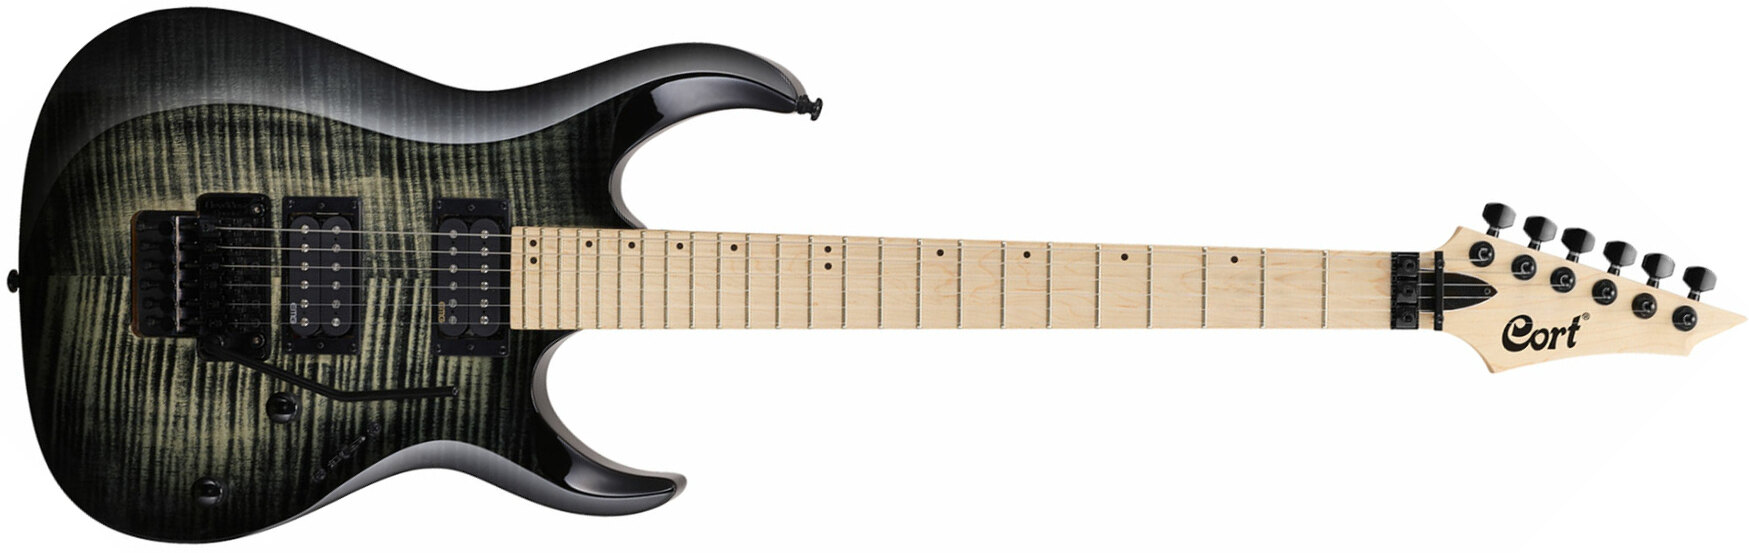 Cort X300 Fr Hh Mn - Grey Burst - Str shape electric guitar - Main picture